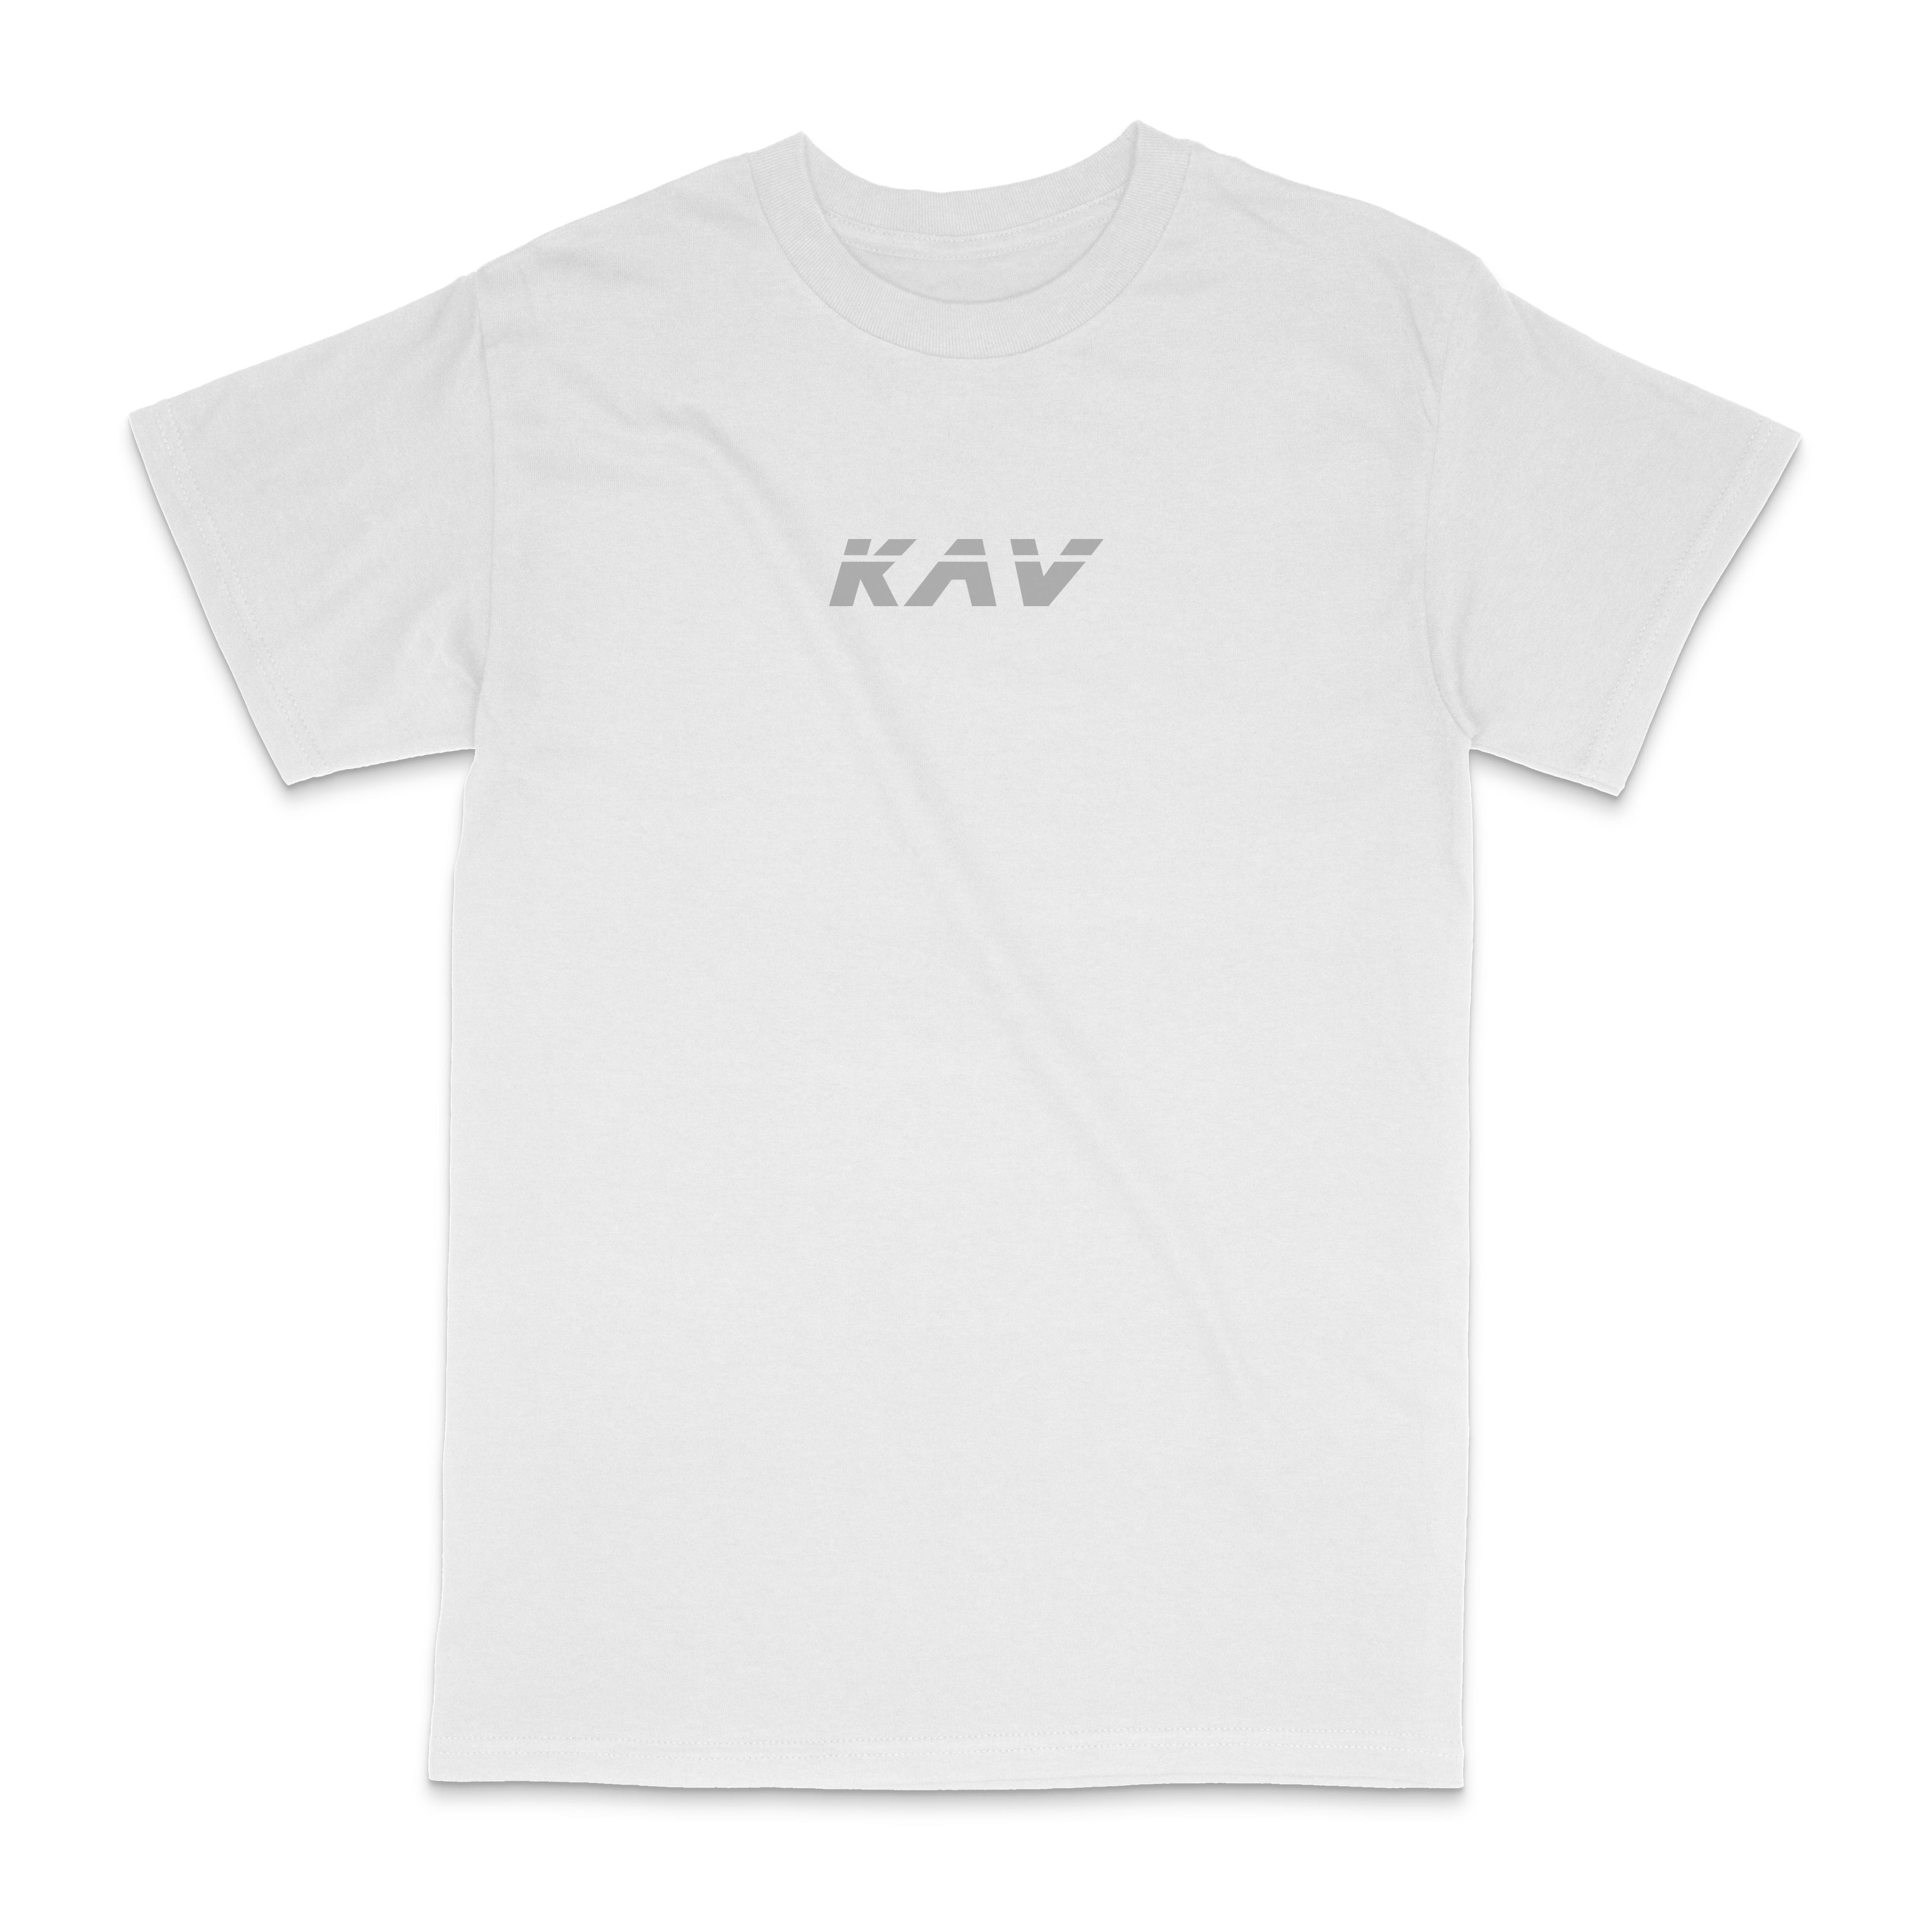 Camiseta extragrande blanca KAV